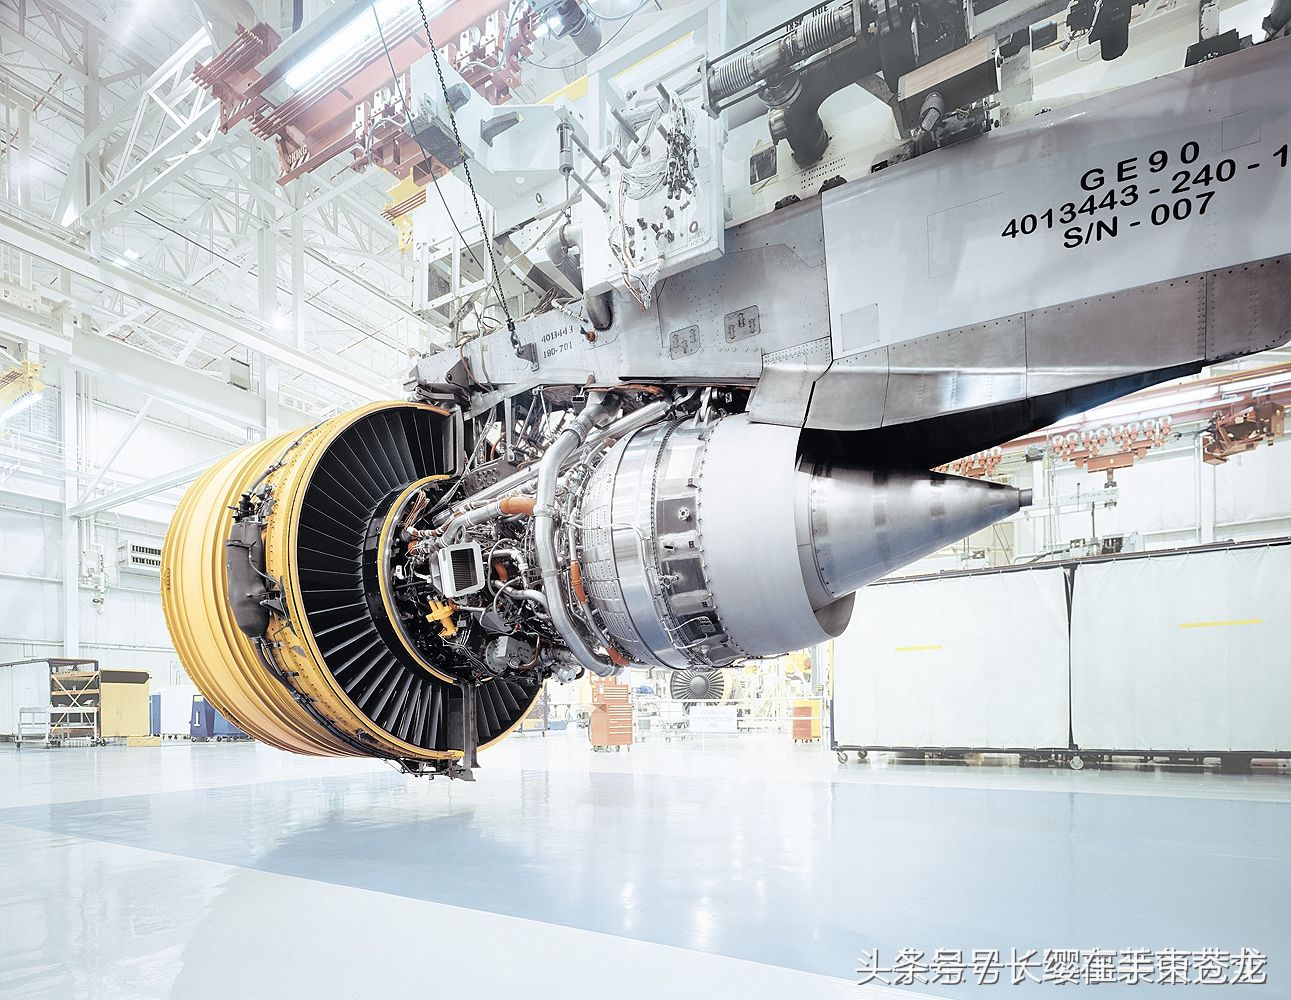 GE90:世界上最大的飞机发动机